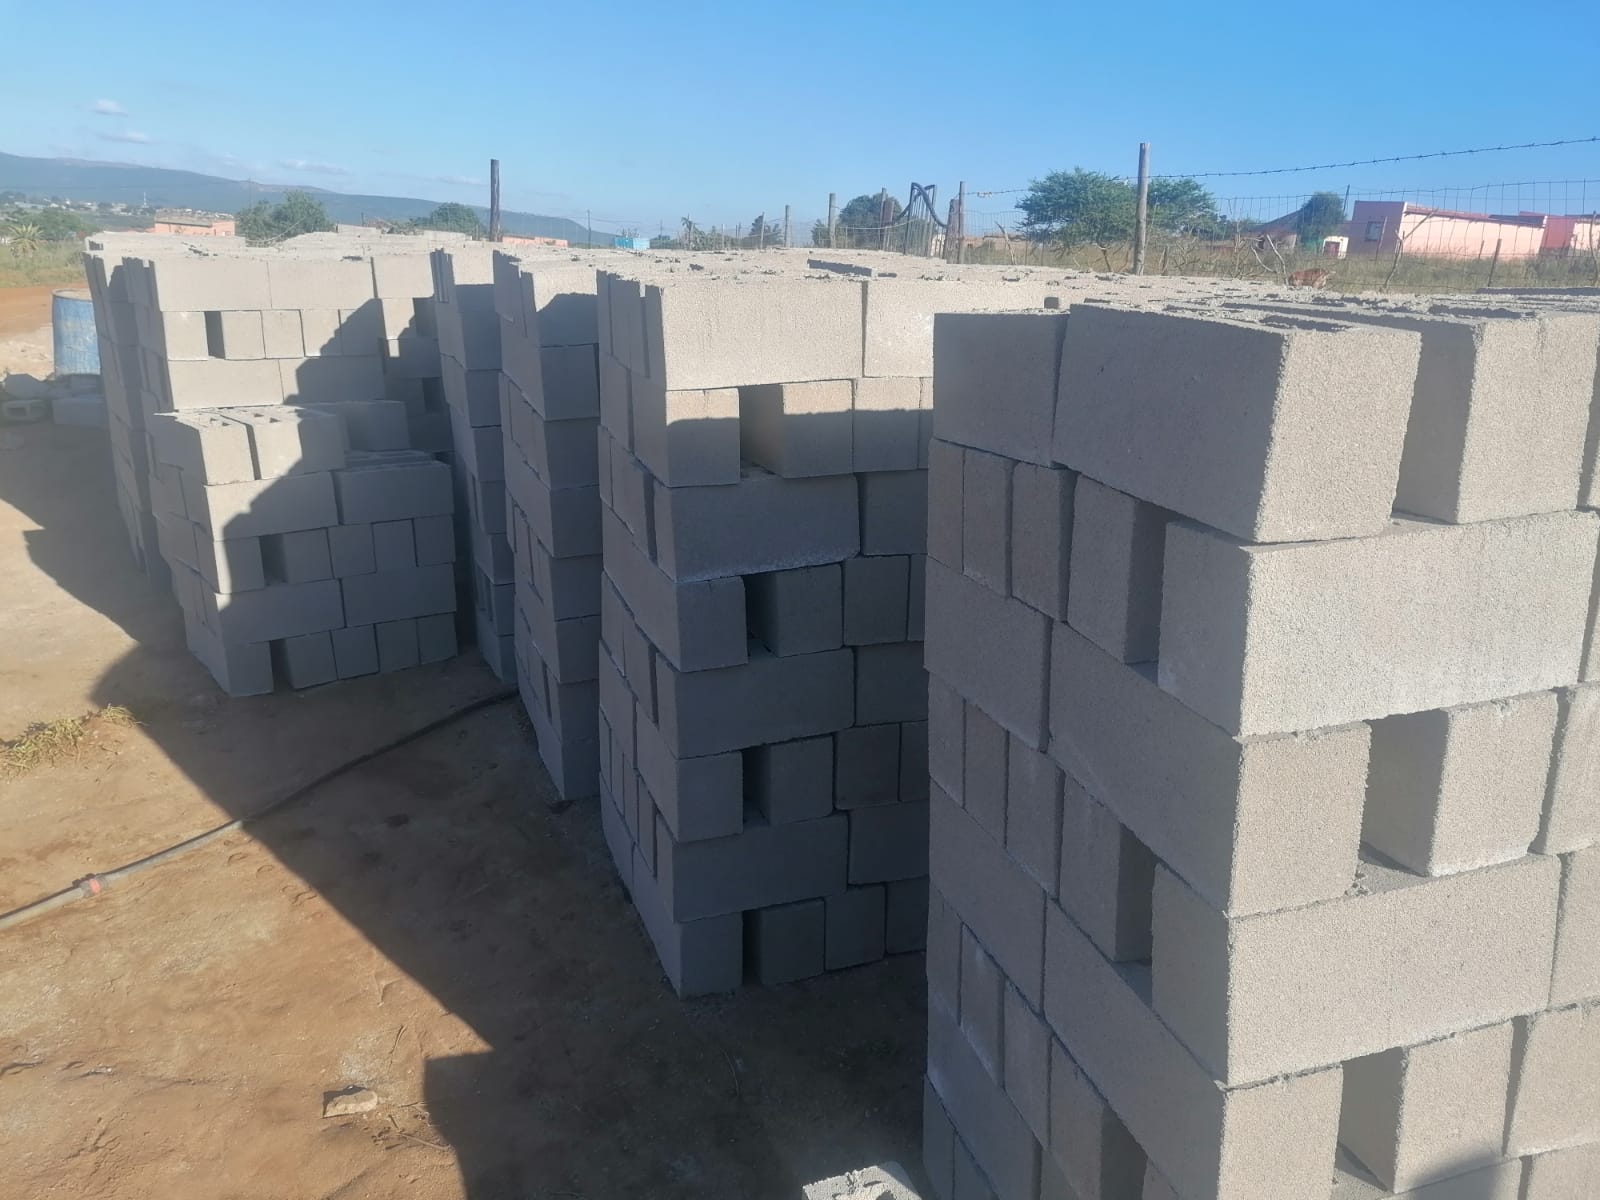 Blocks For Sale in Ulundi, Kwazulu Natal